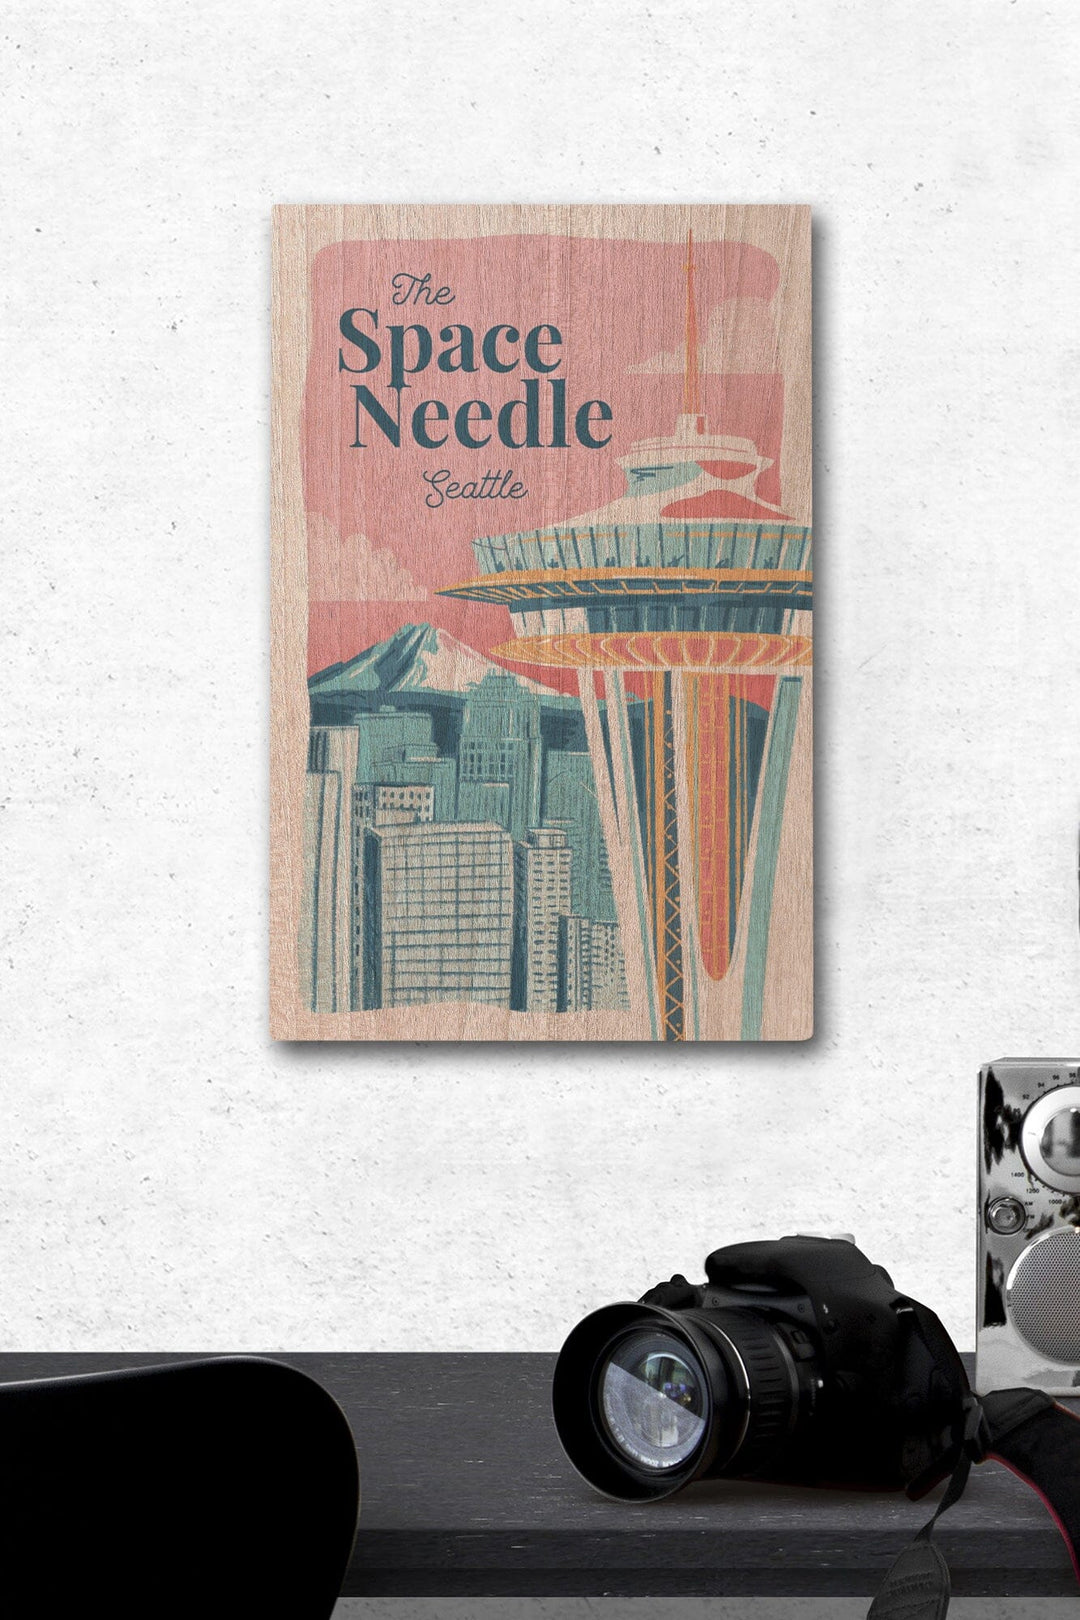 Seattle, Washington, Space Needle, Epic City Scene, Wood Signs and Postcards Wood Lantern Press 12 x 18 Wood Gallery Print 